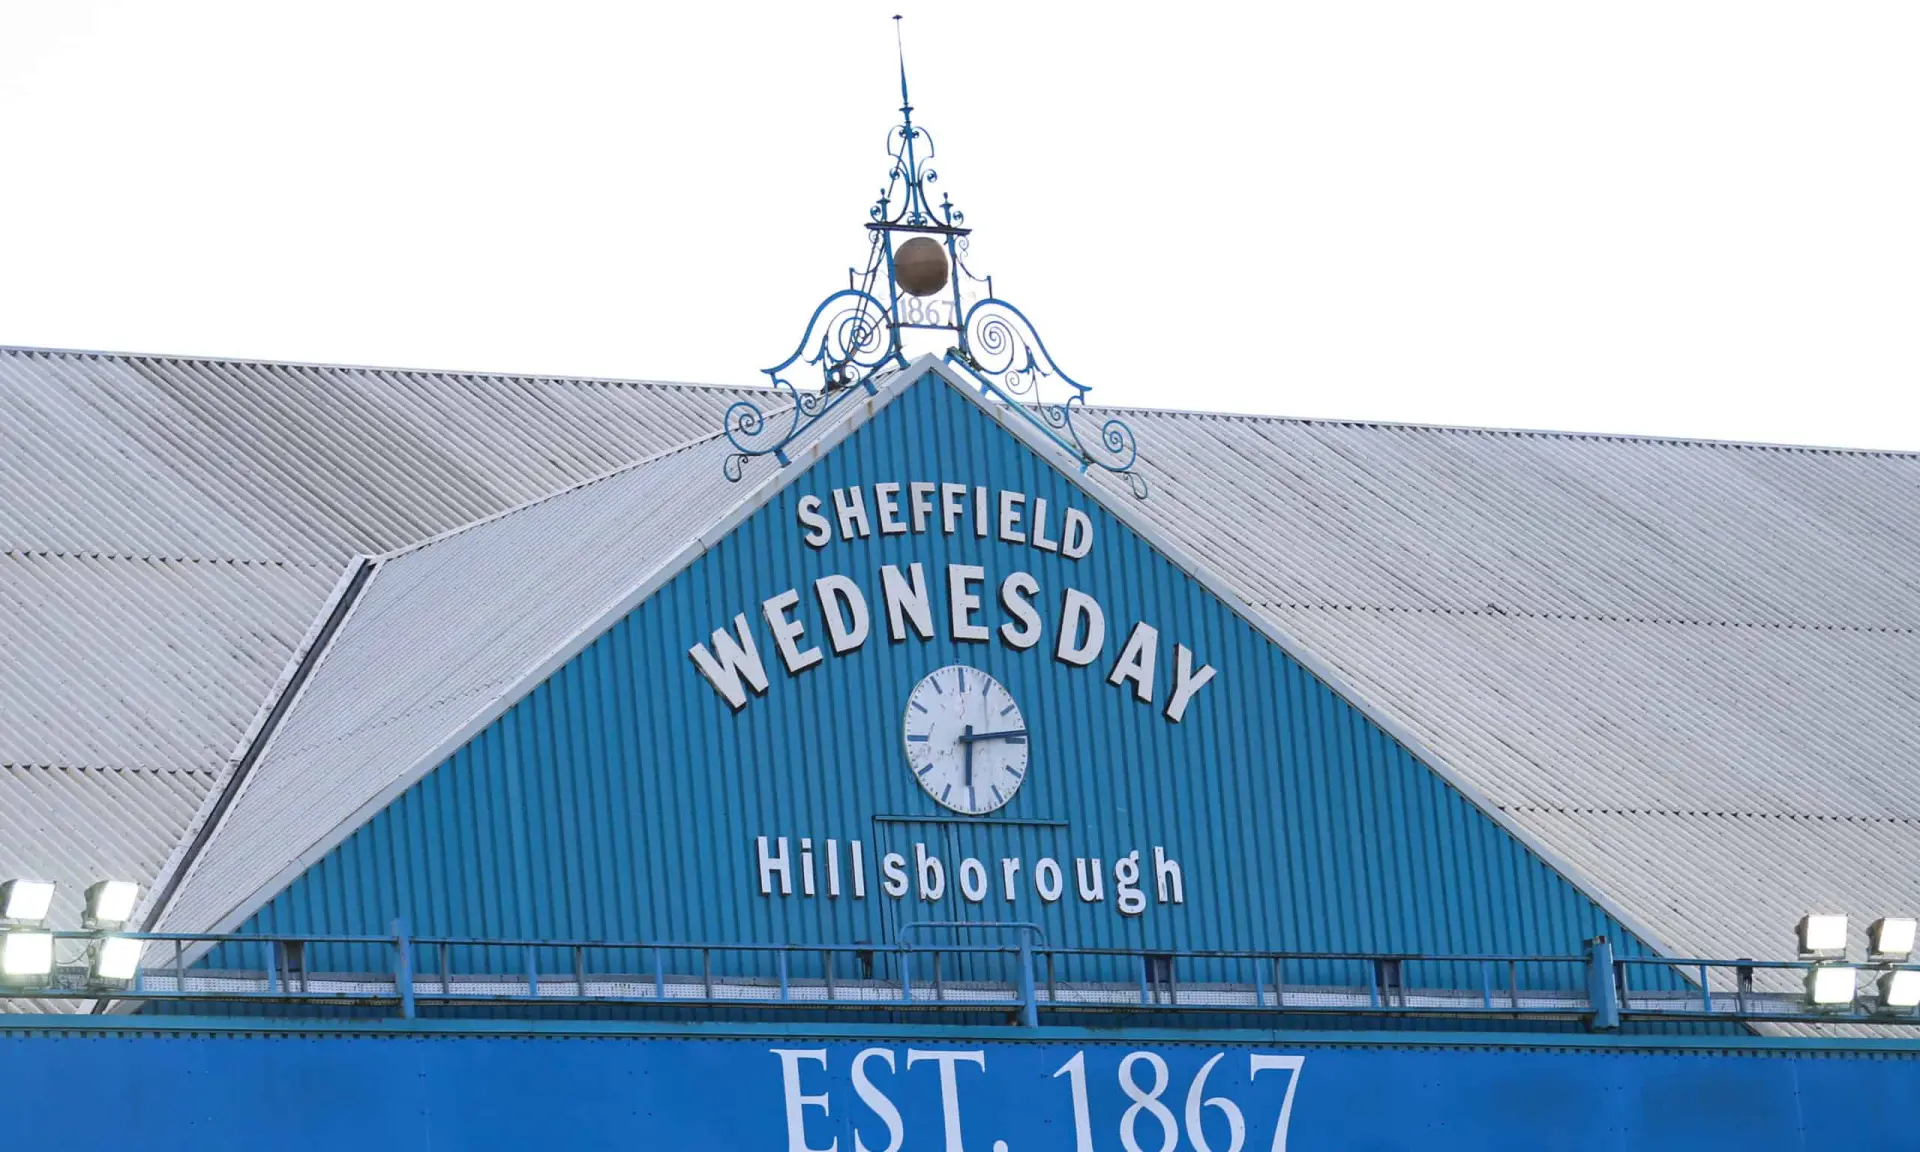 Hillsborough, Sheff Wed v Huddersfield betting tips